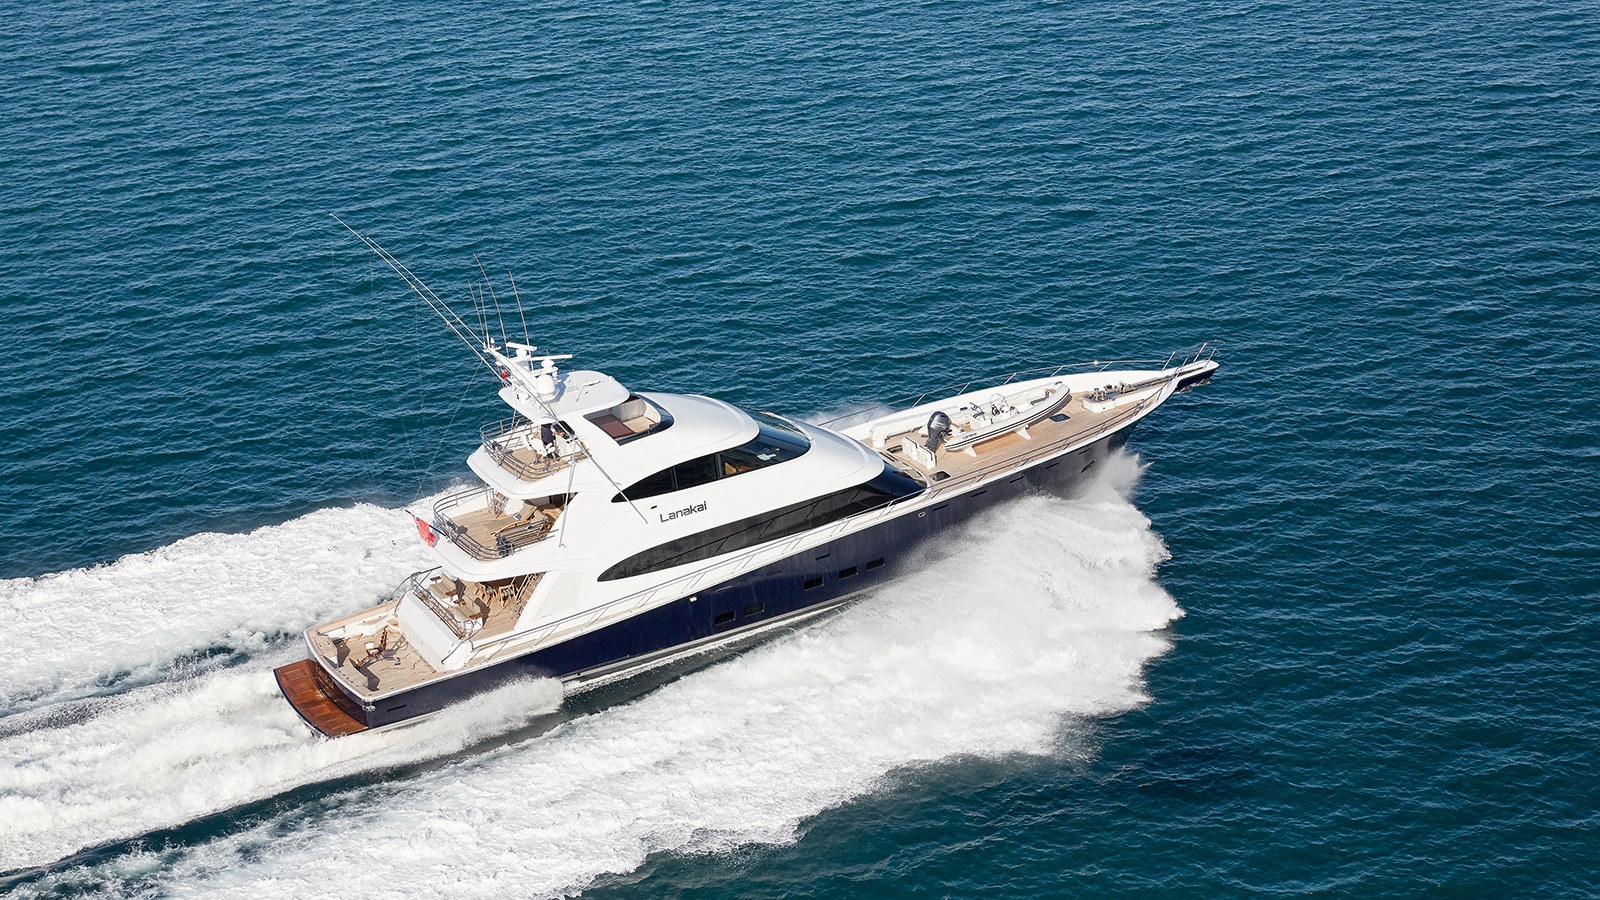 Lanakai: On board the 39.5m maxi Sportfish yacht